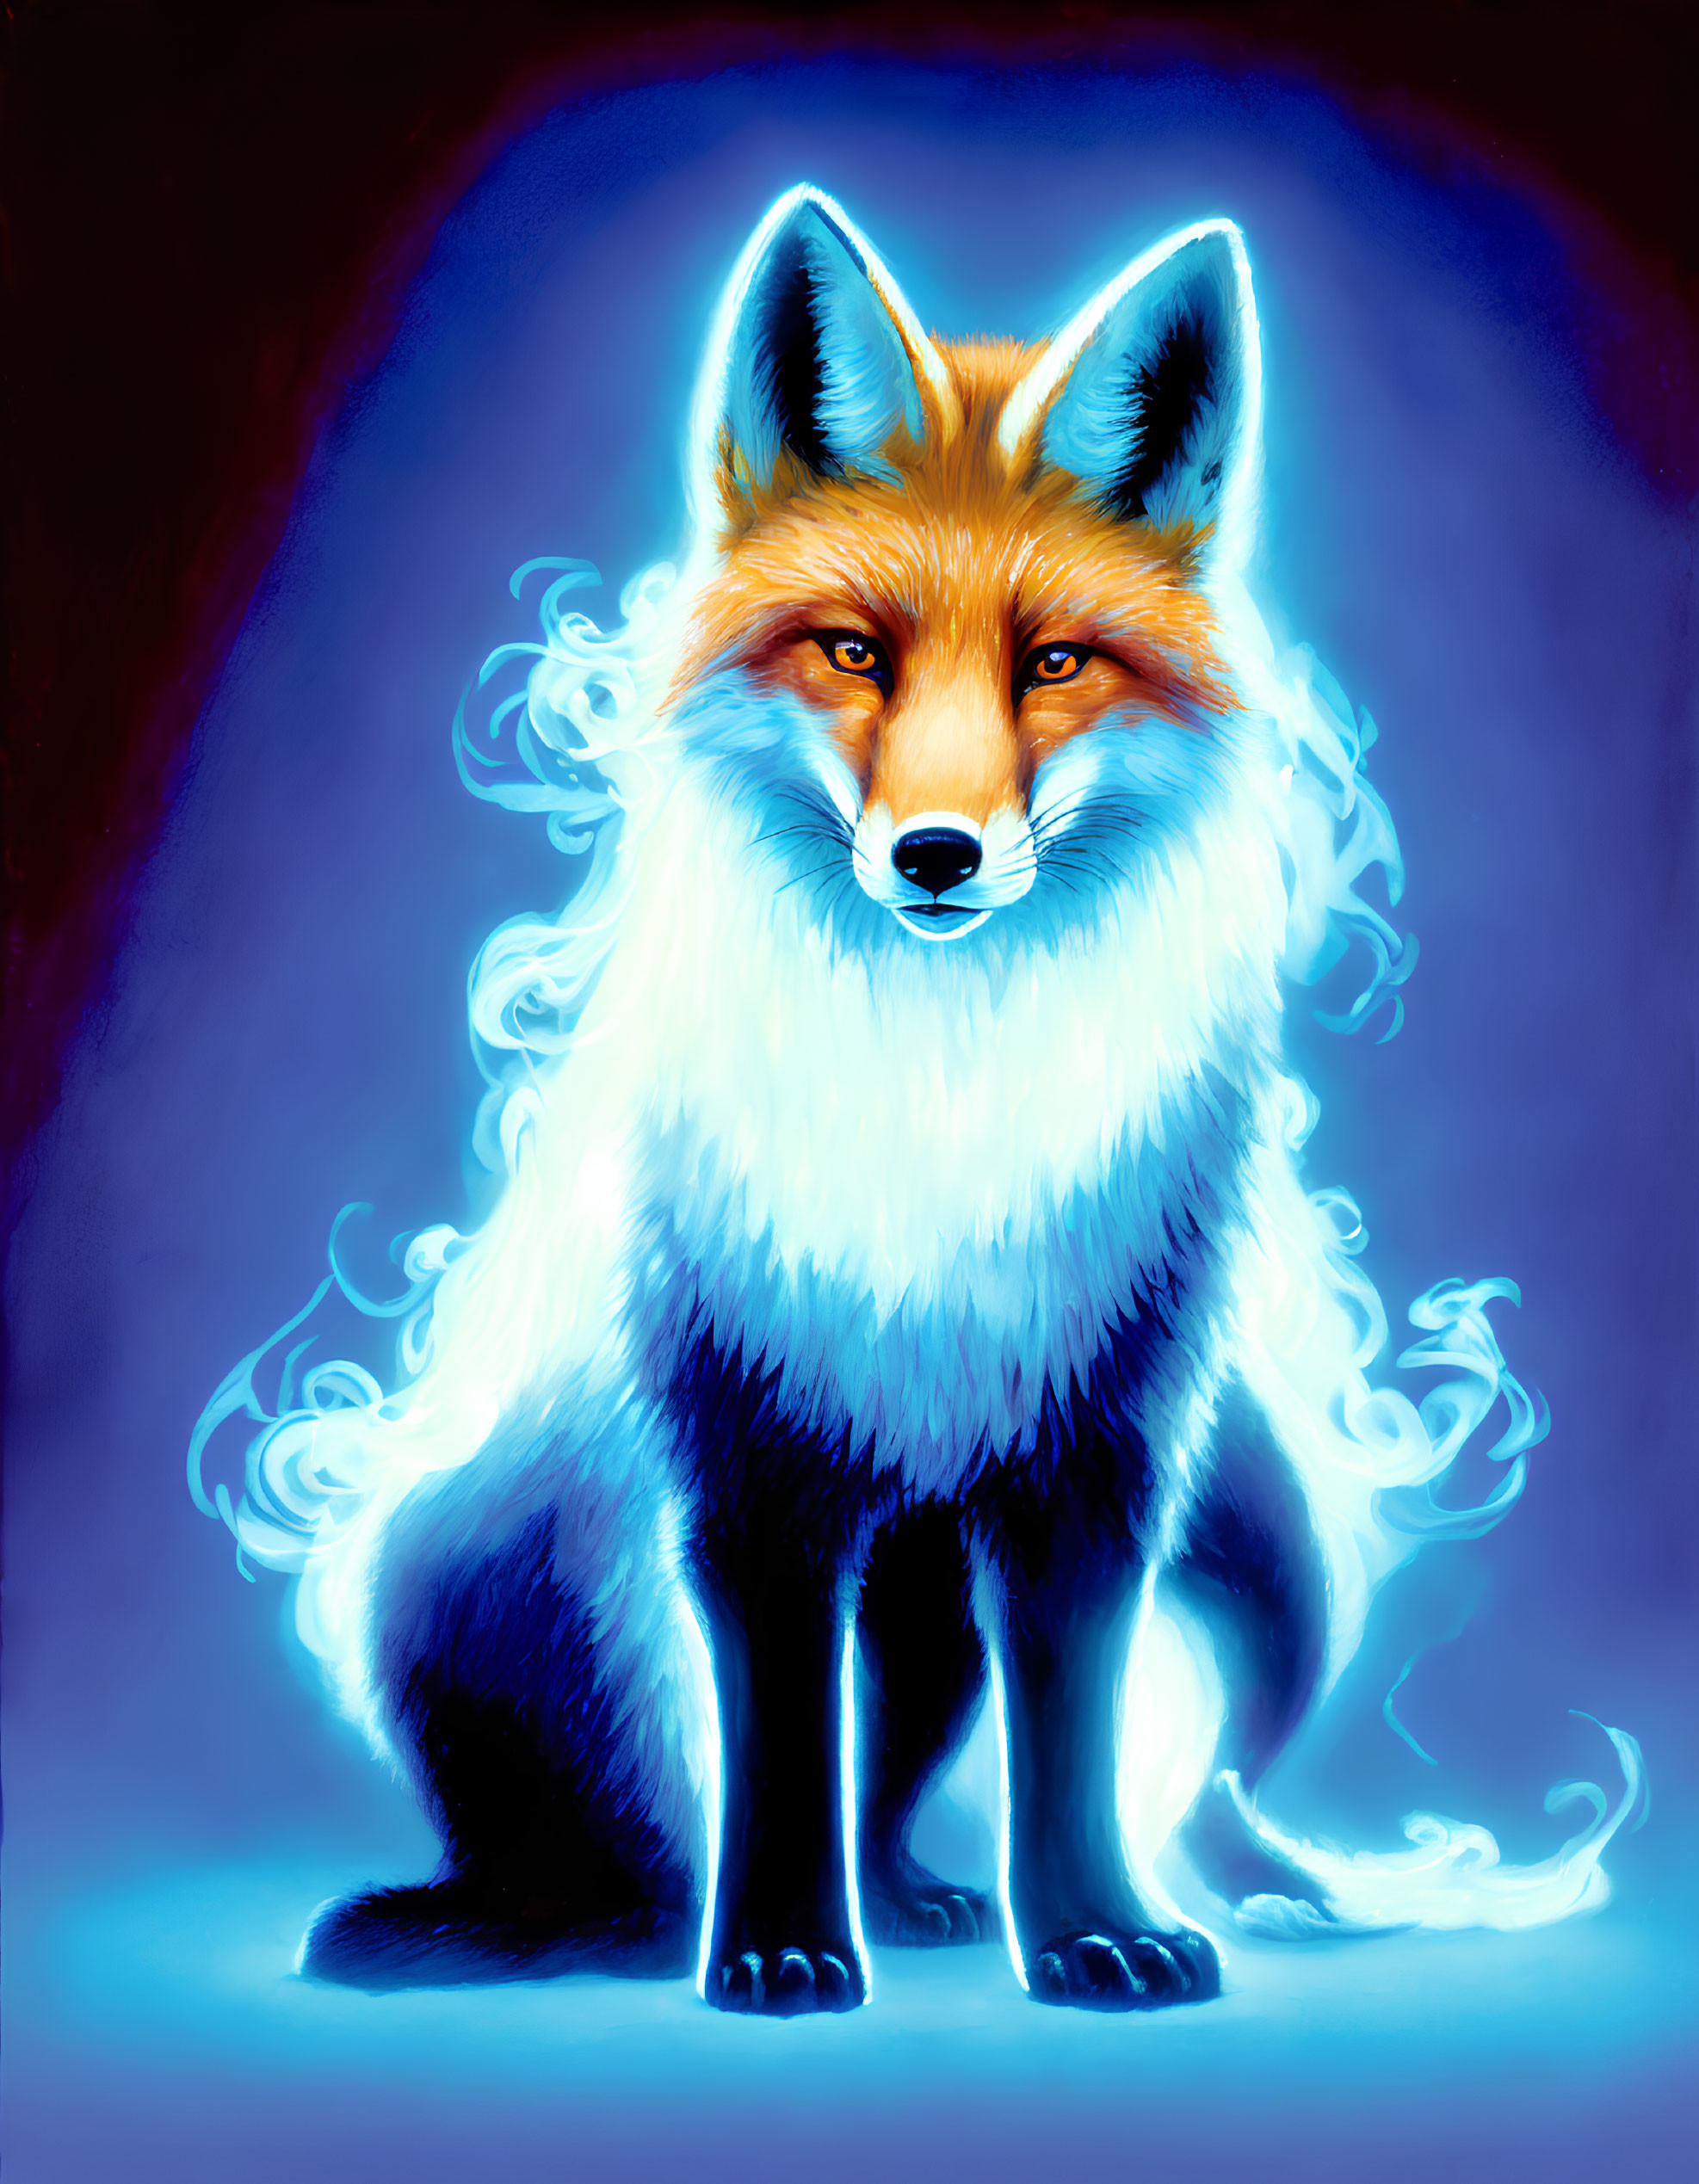 Illustration: Fox engulfed in blue flames on dark background